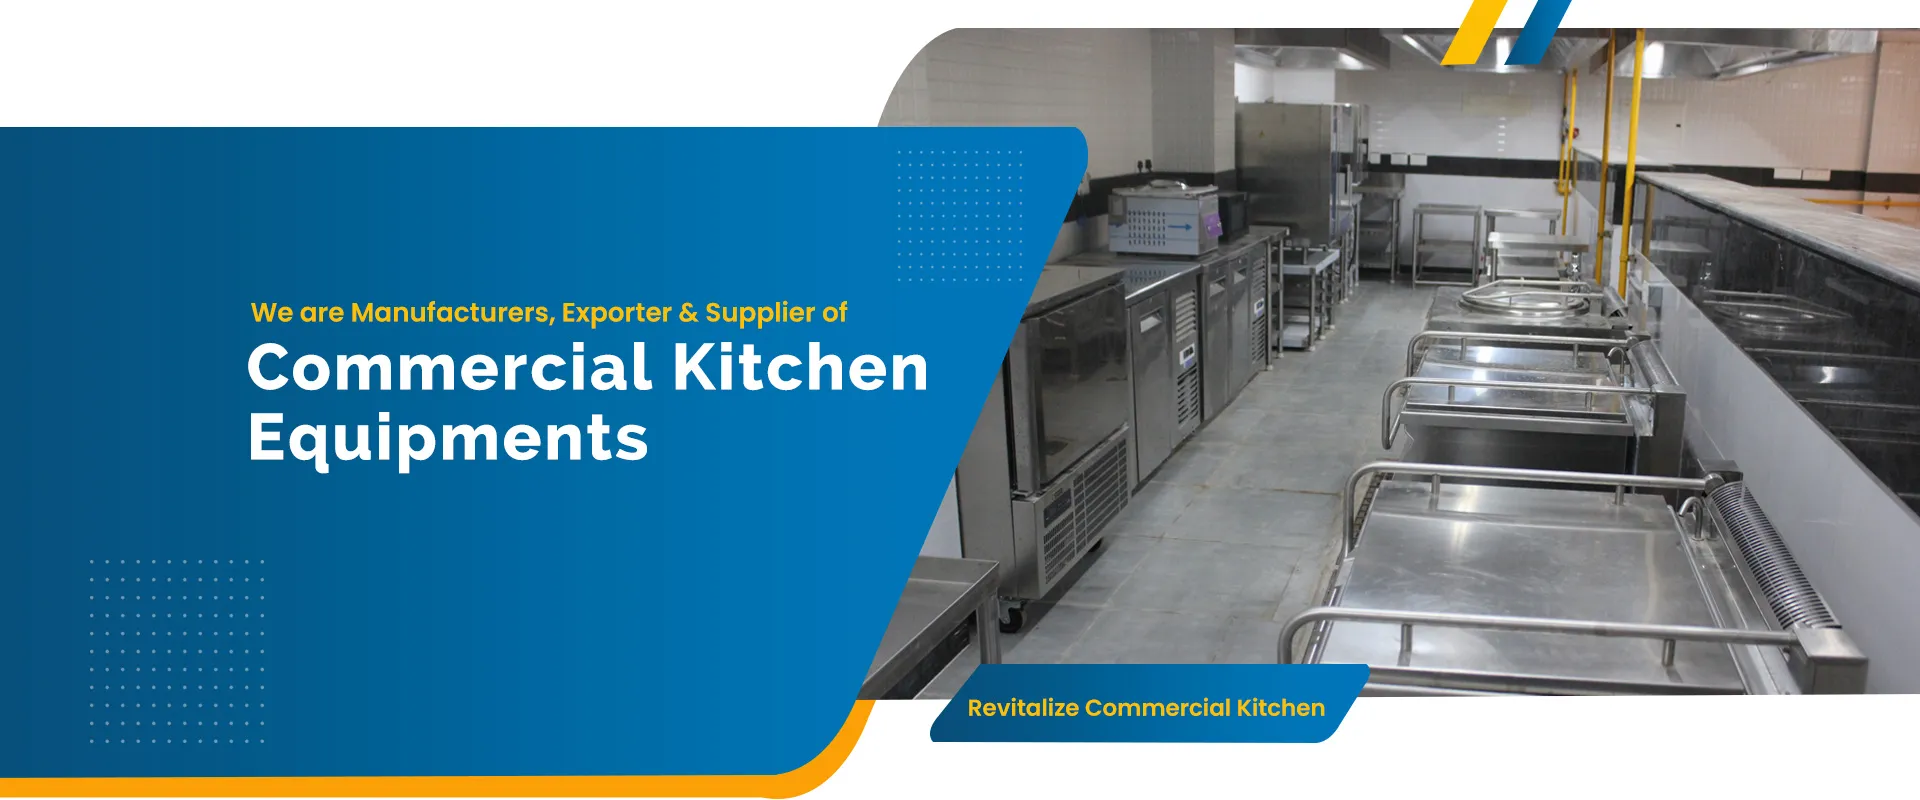 Manufacturers, Exporters & Supplier of Kitchen Equipment.